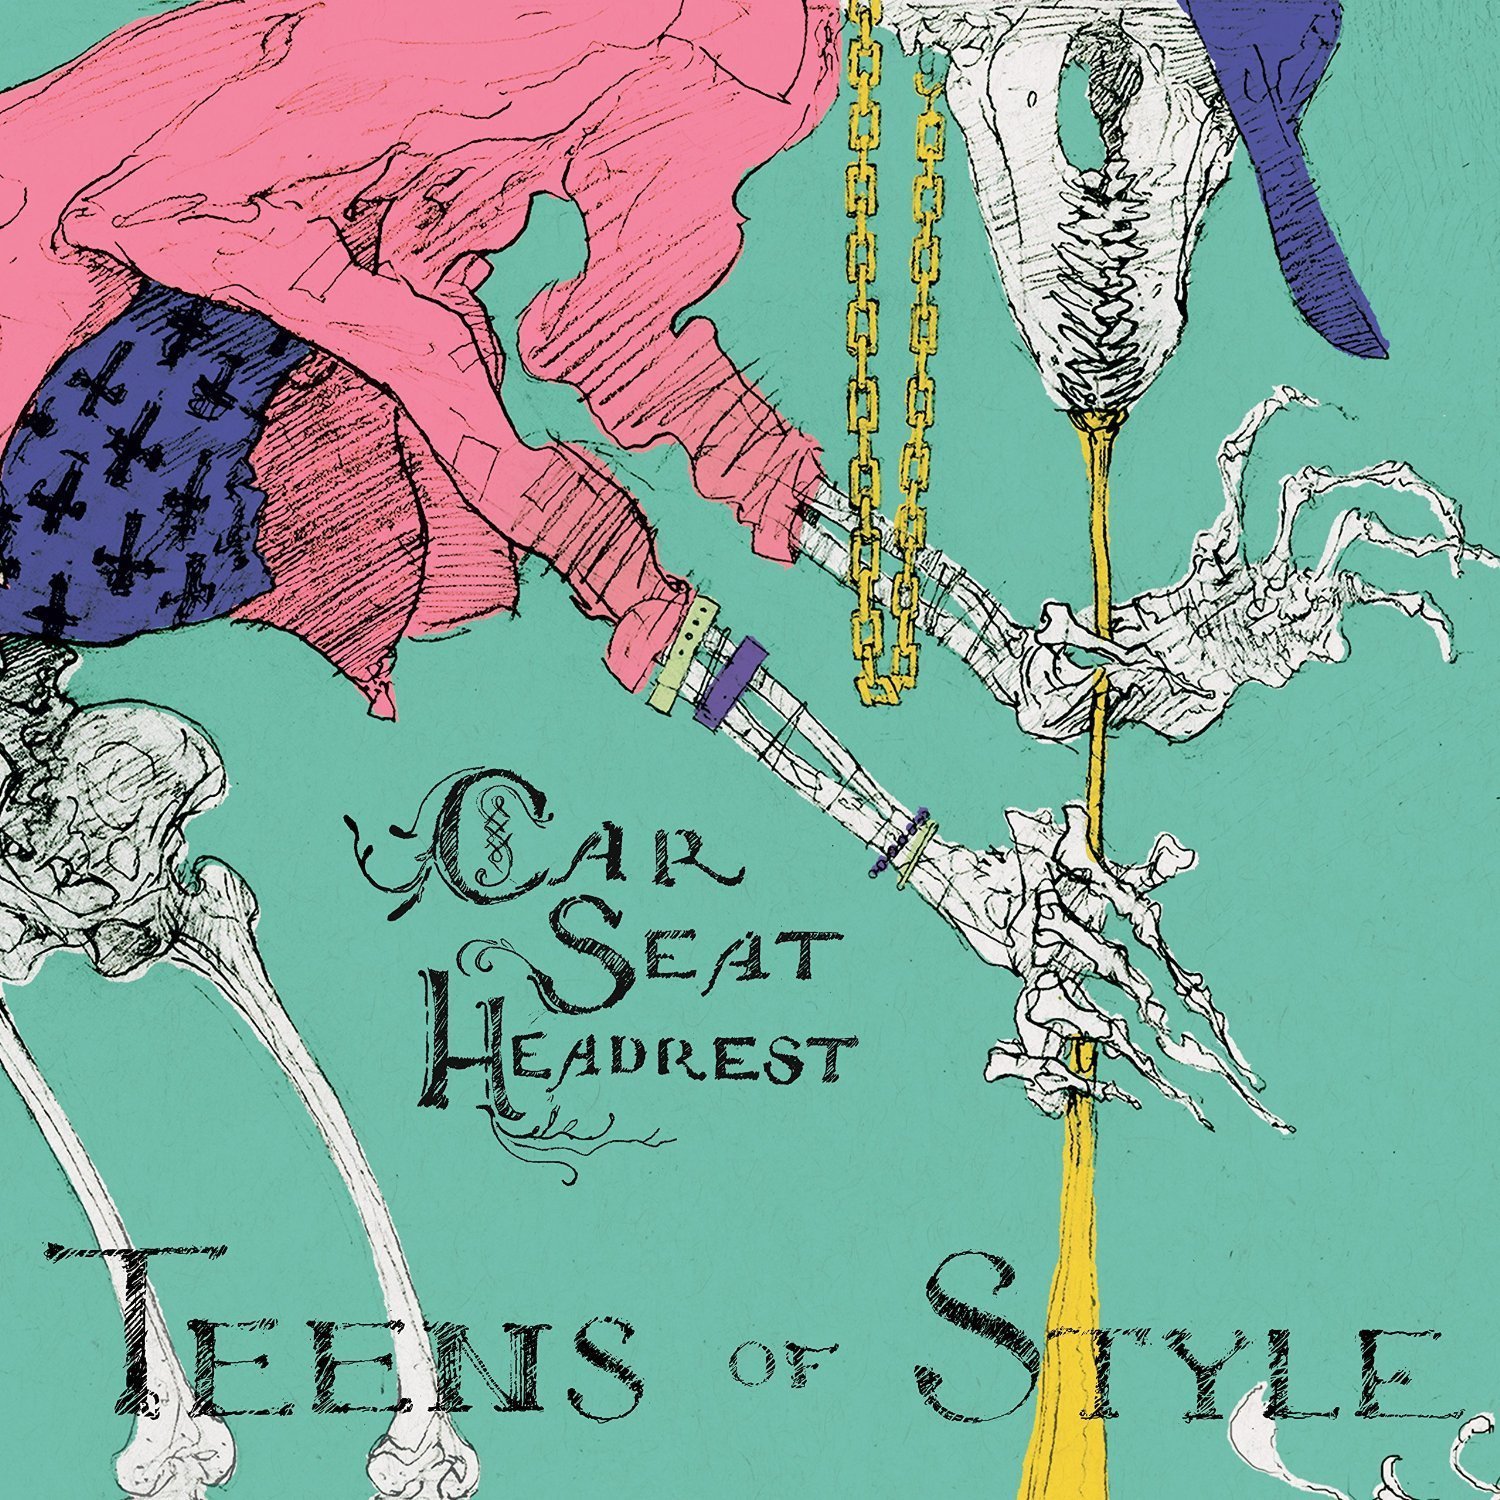 car-seat-headrest-teens-of-style